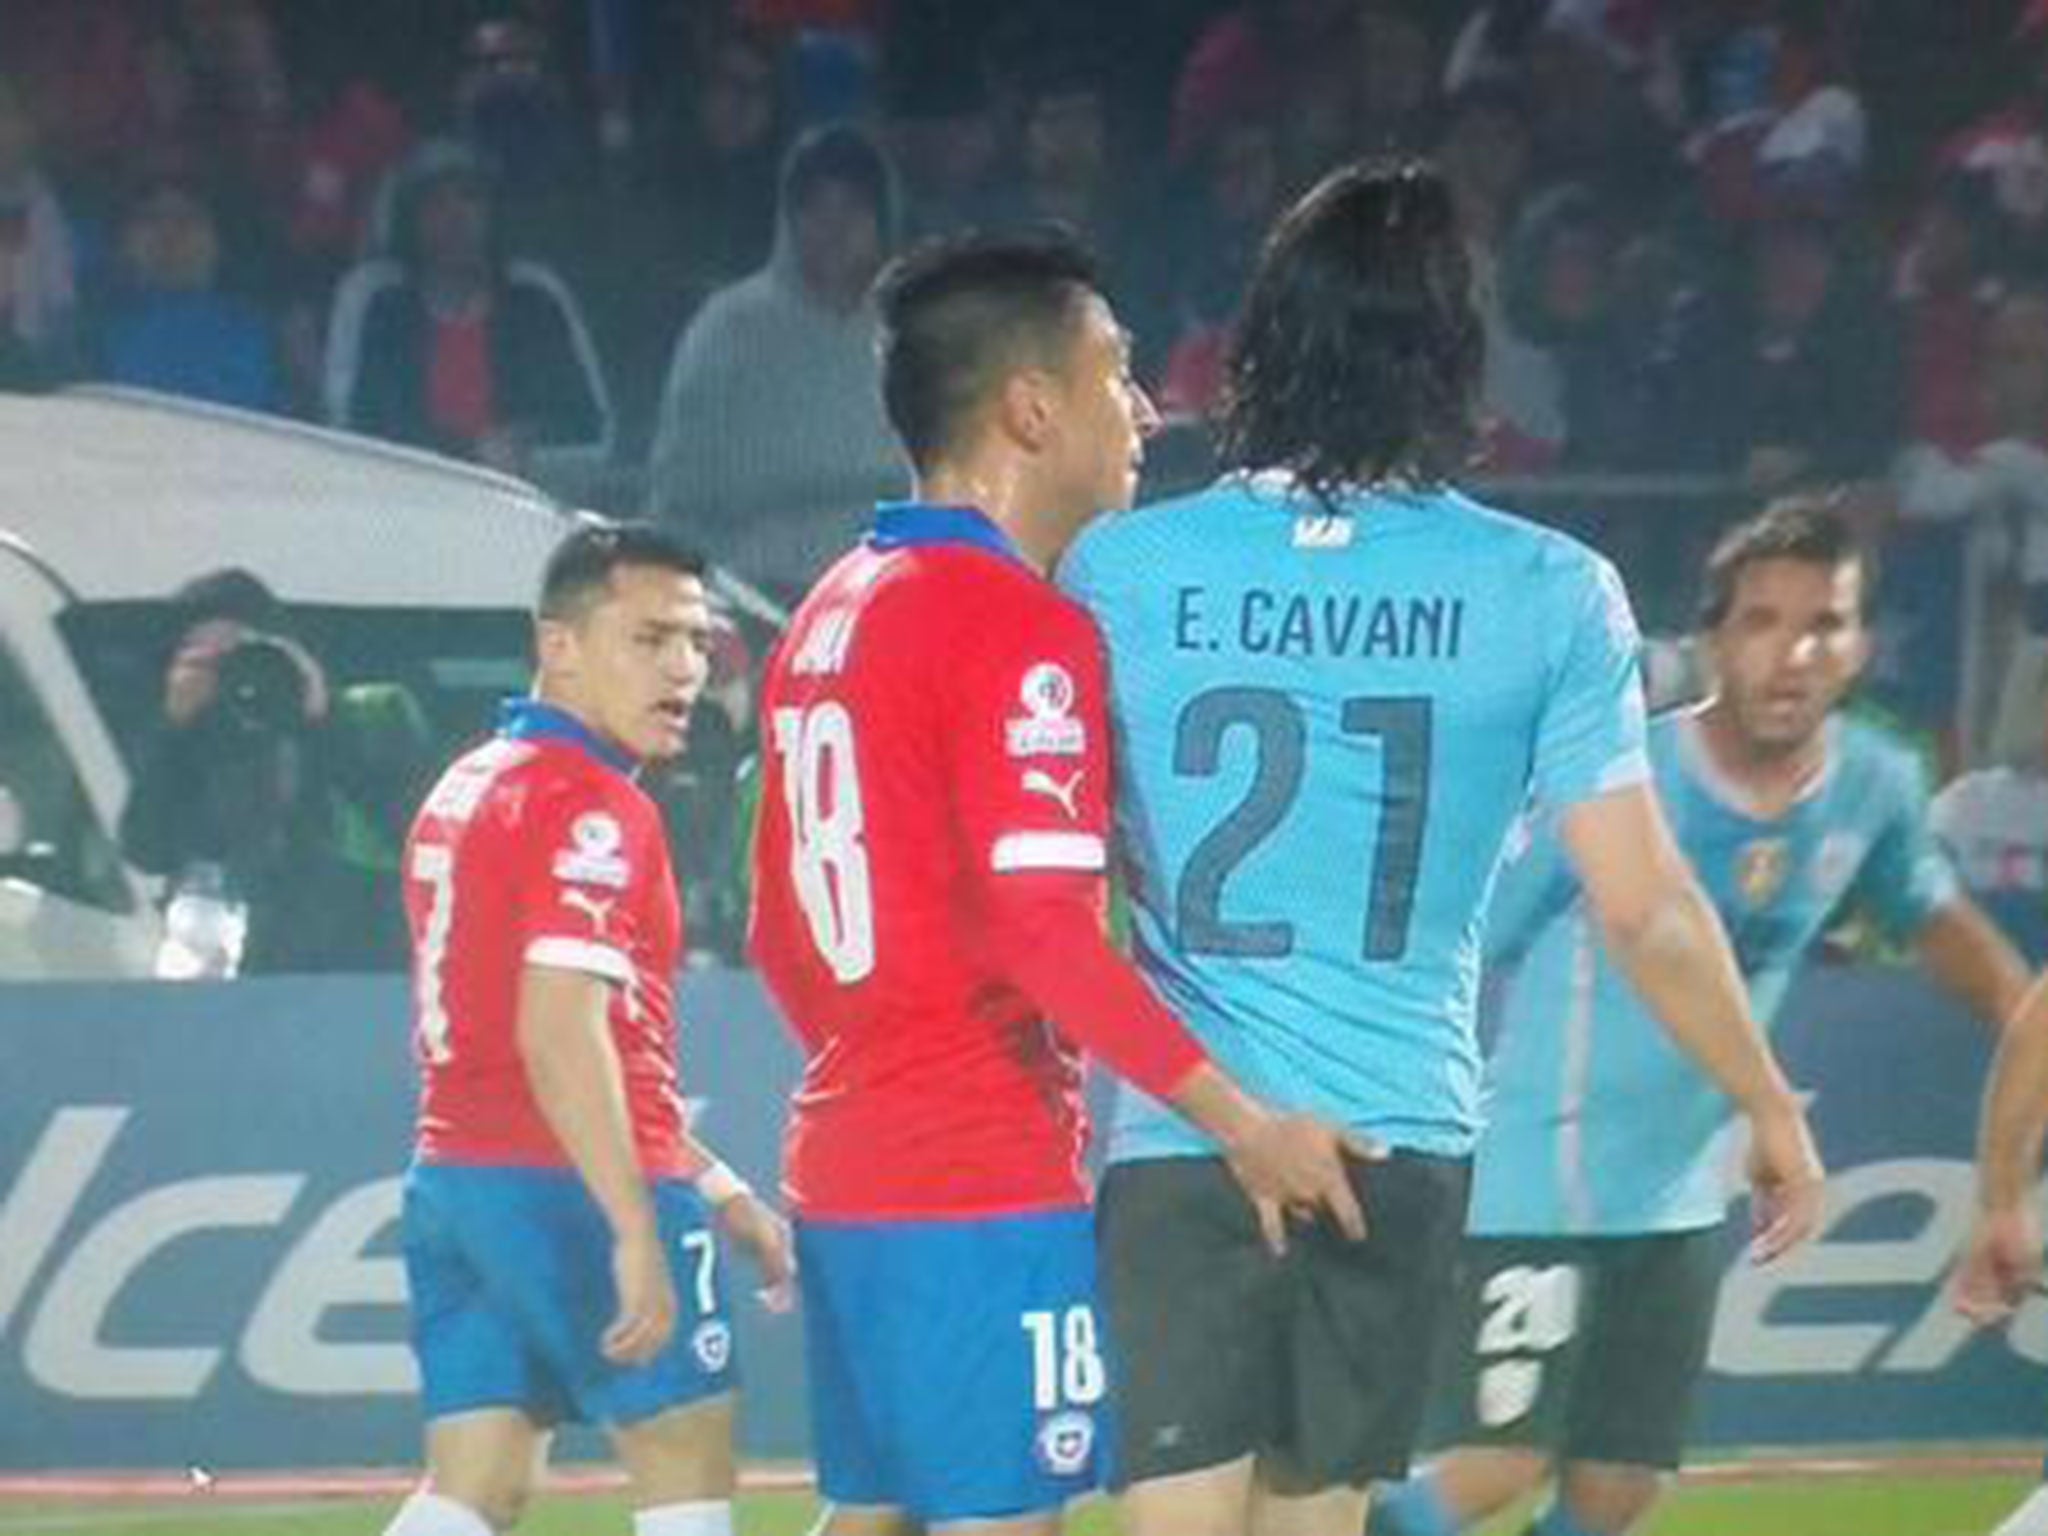 Gonzalo Jara pokes Edinson Cavani in his bottom